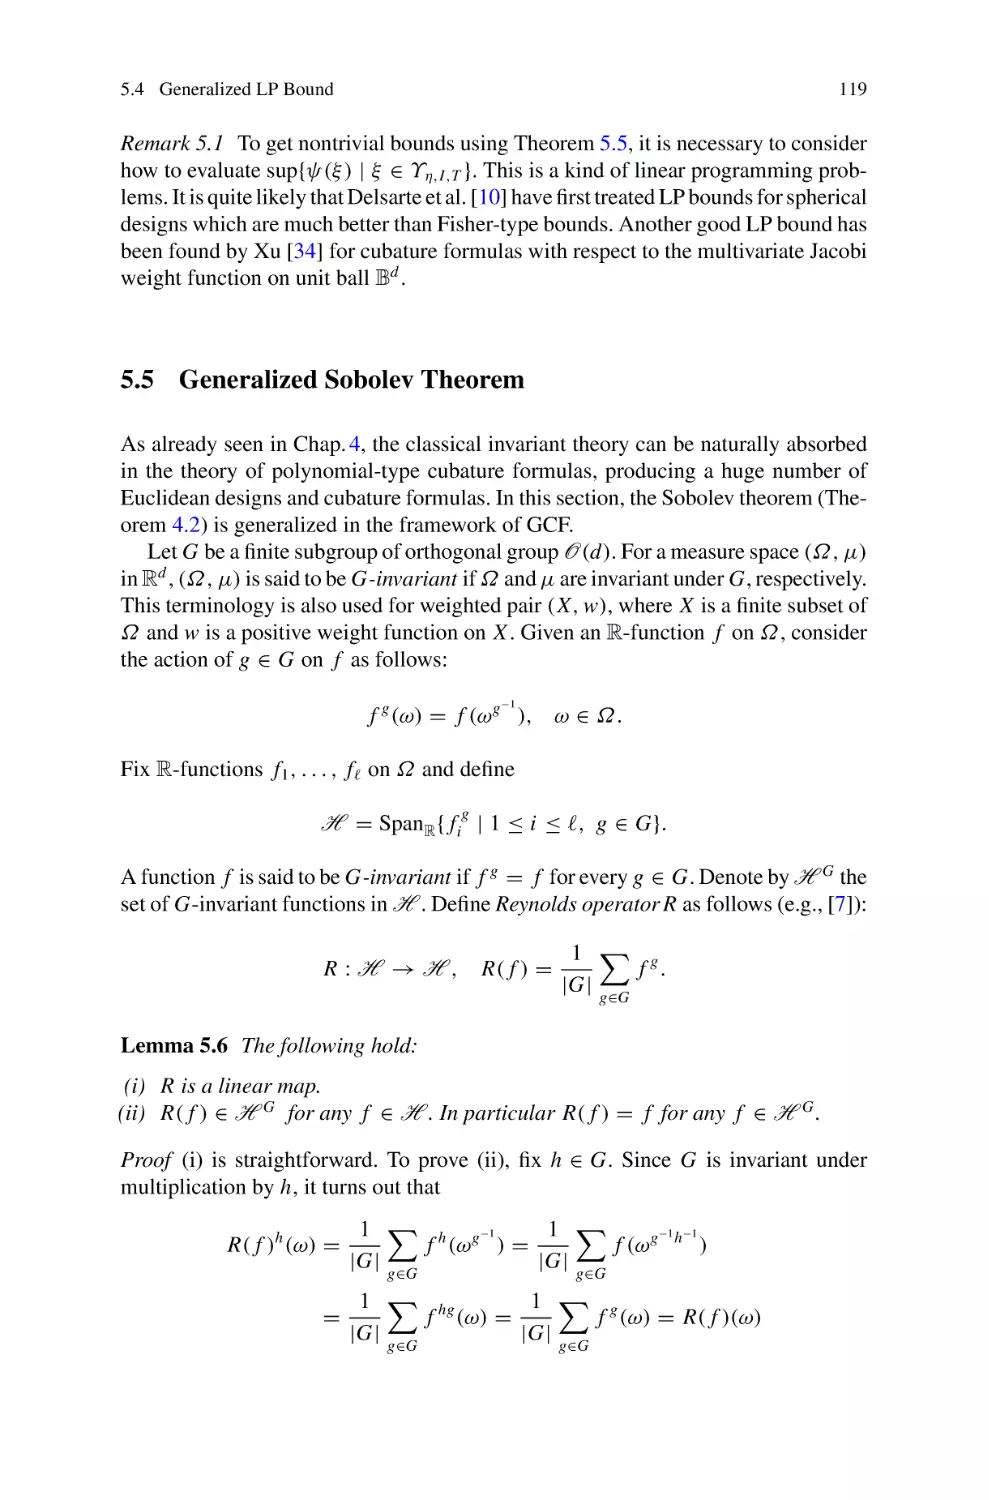 5.5 Generalized Sobolev Theorem